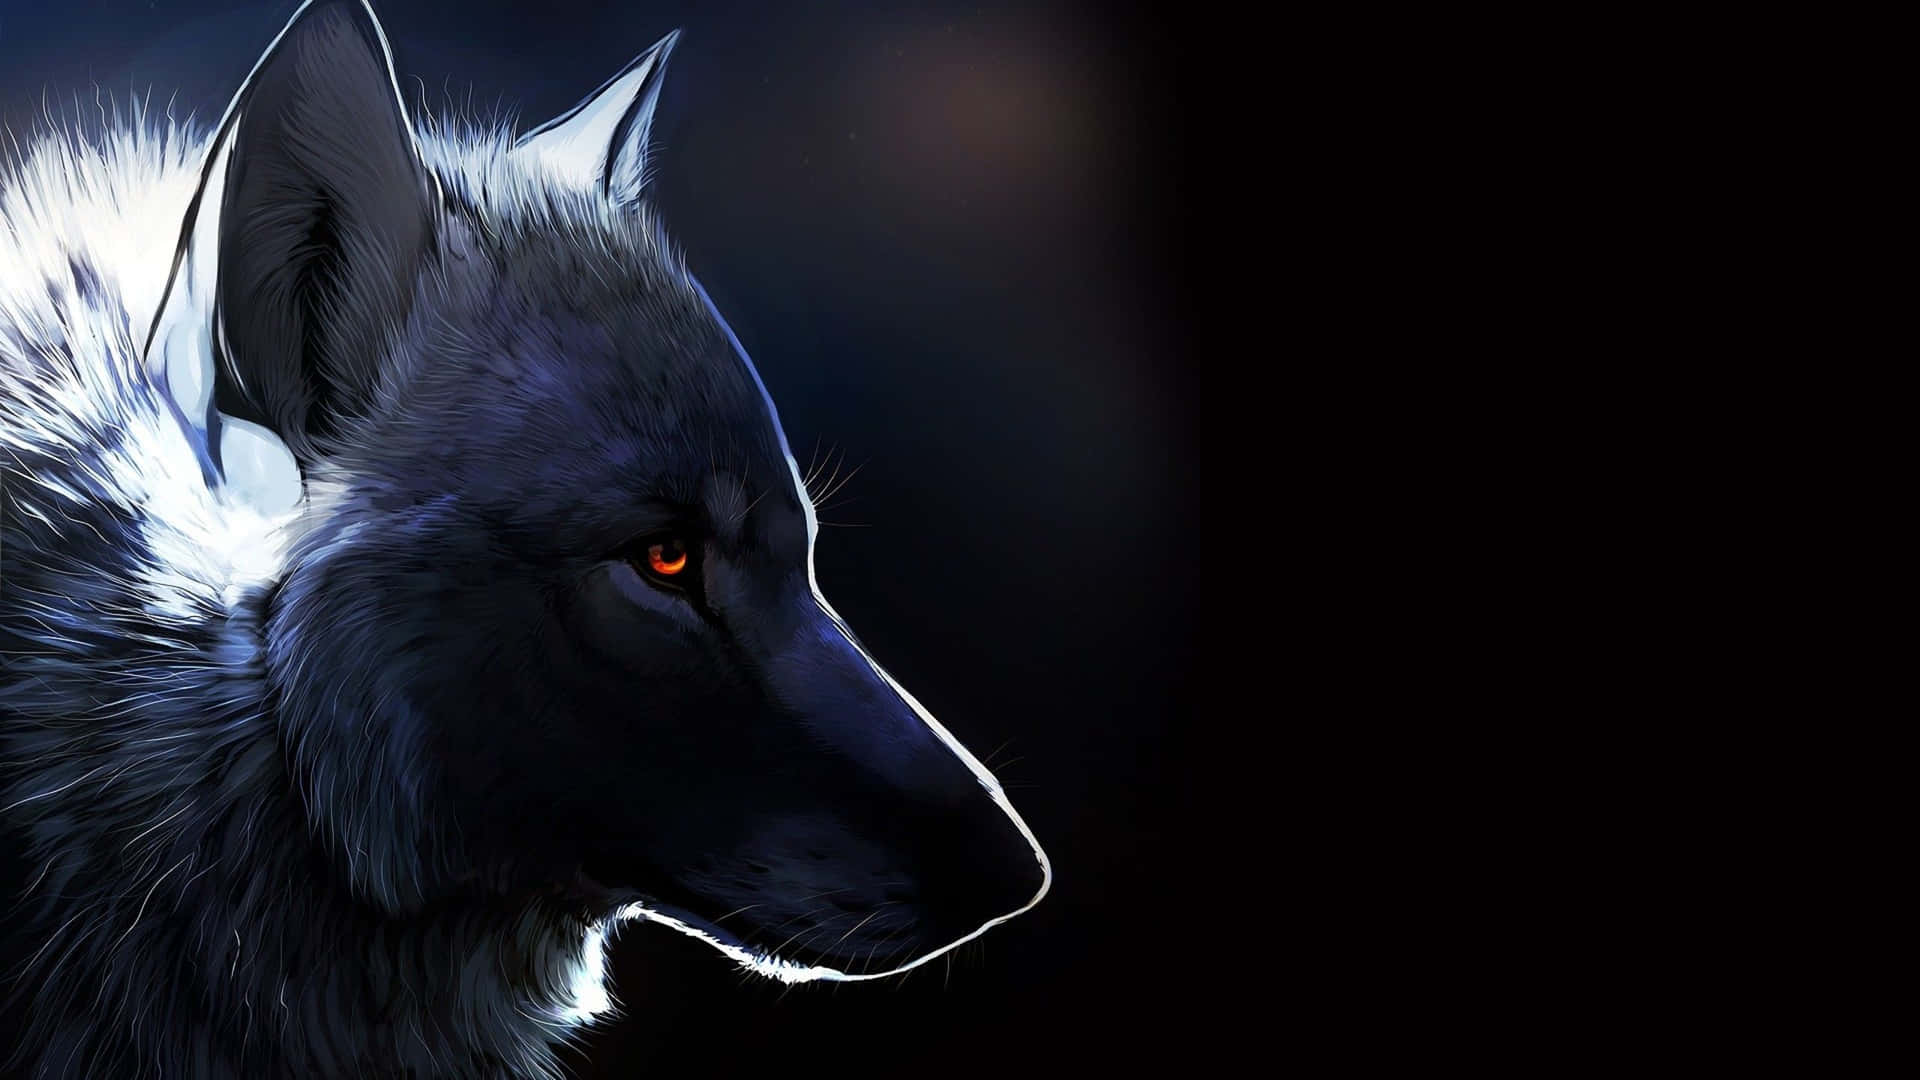 "Lone Wolf"